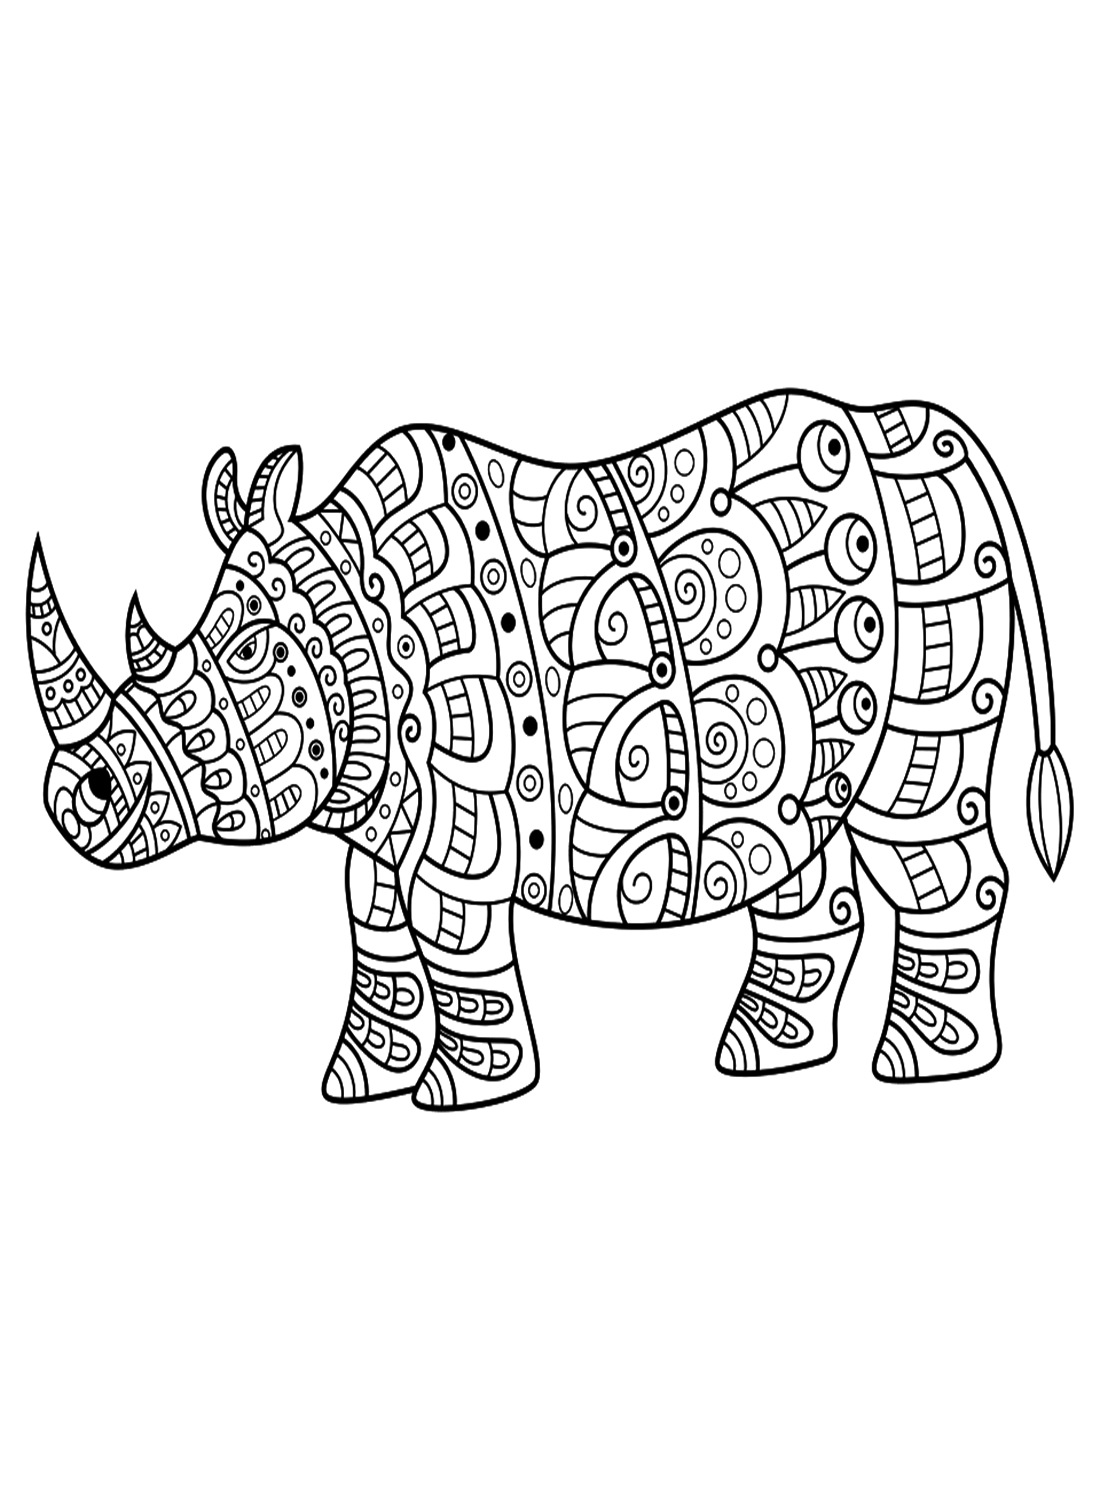 Rinoceronte in stile Zentangle di Rhino